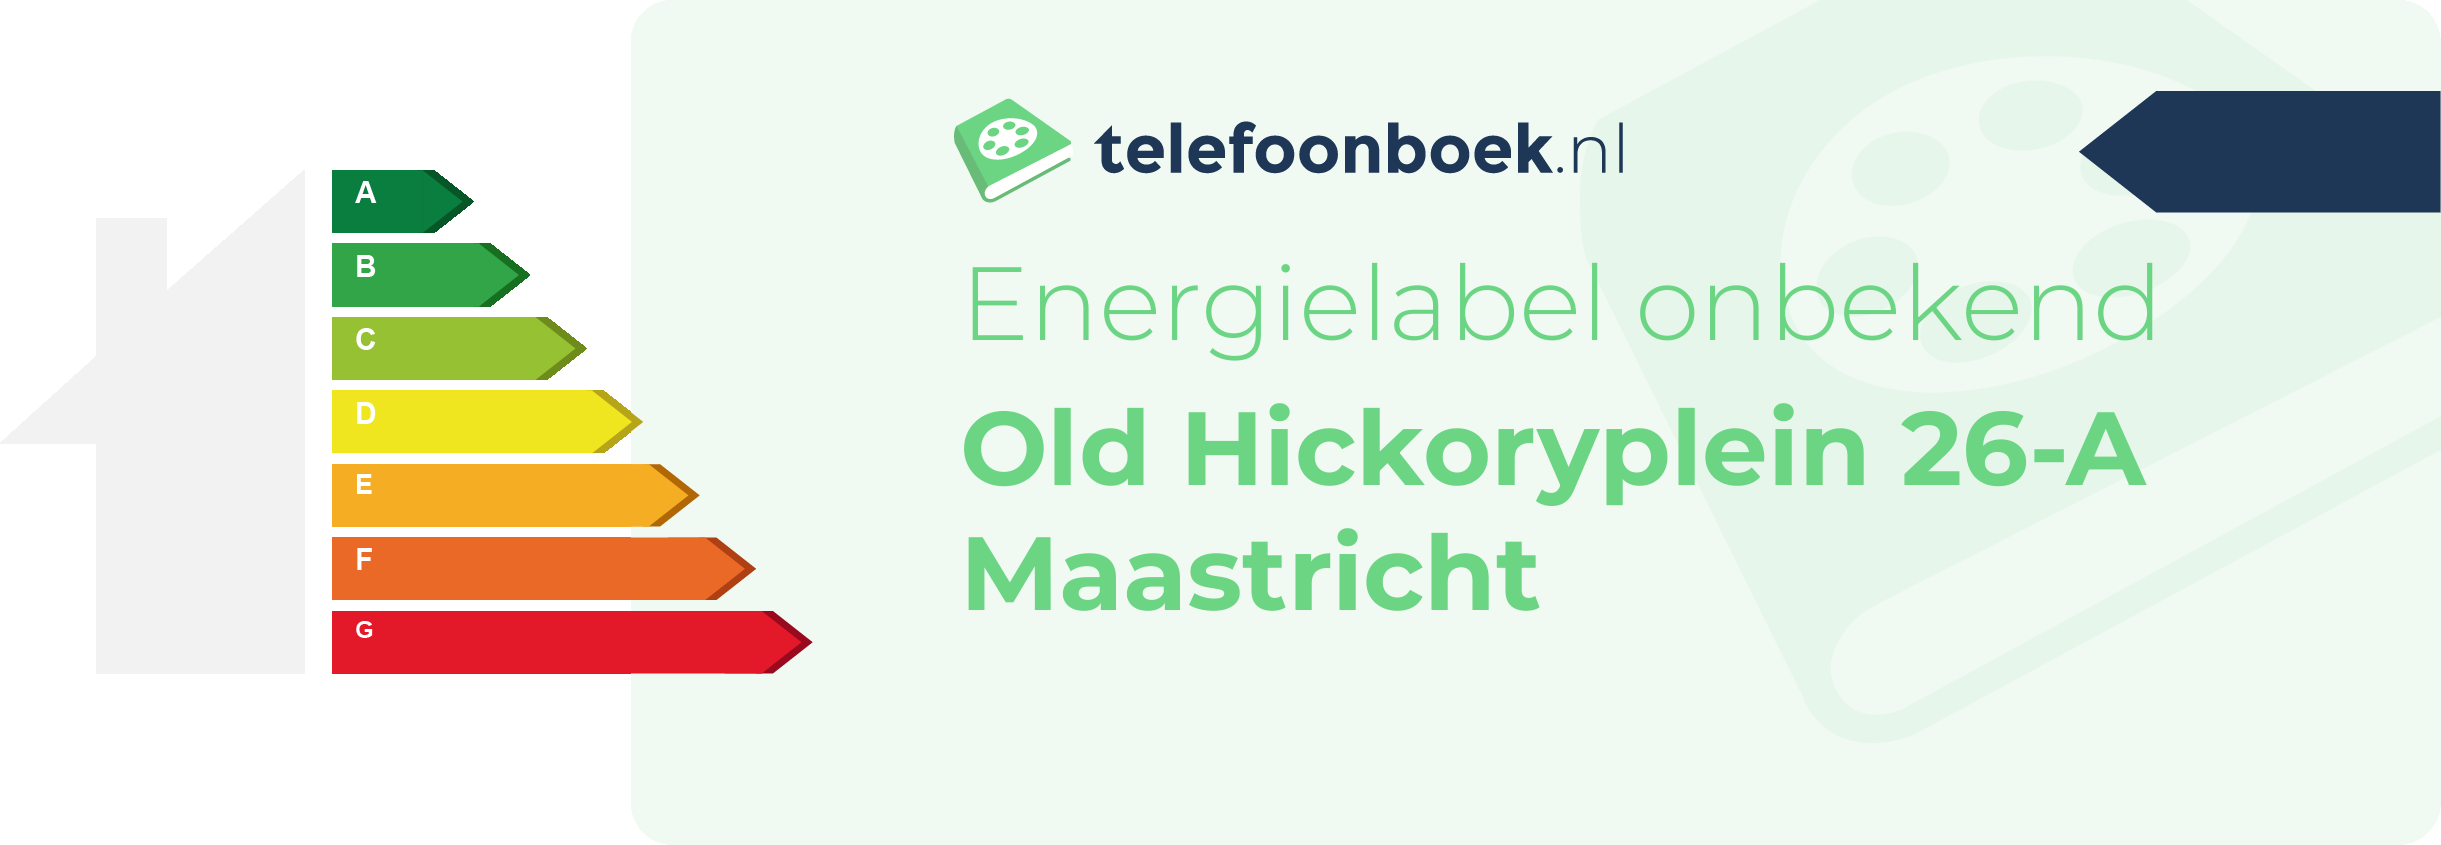 Energielabel Old Hickoryplein 26-A Maastricht